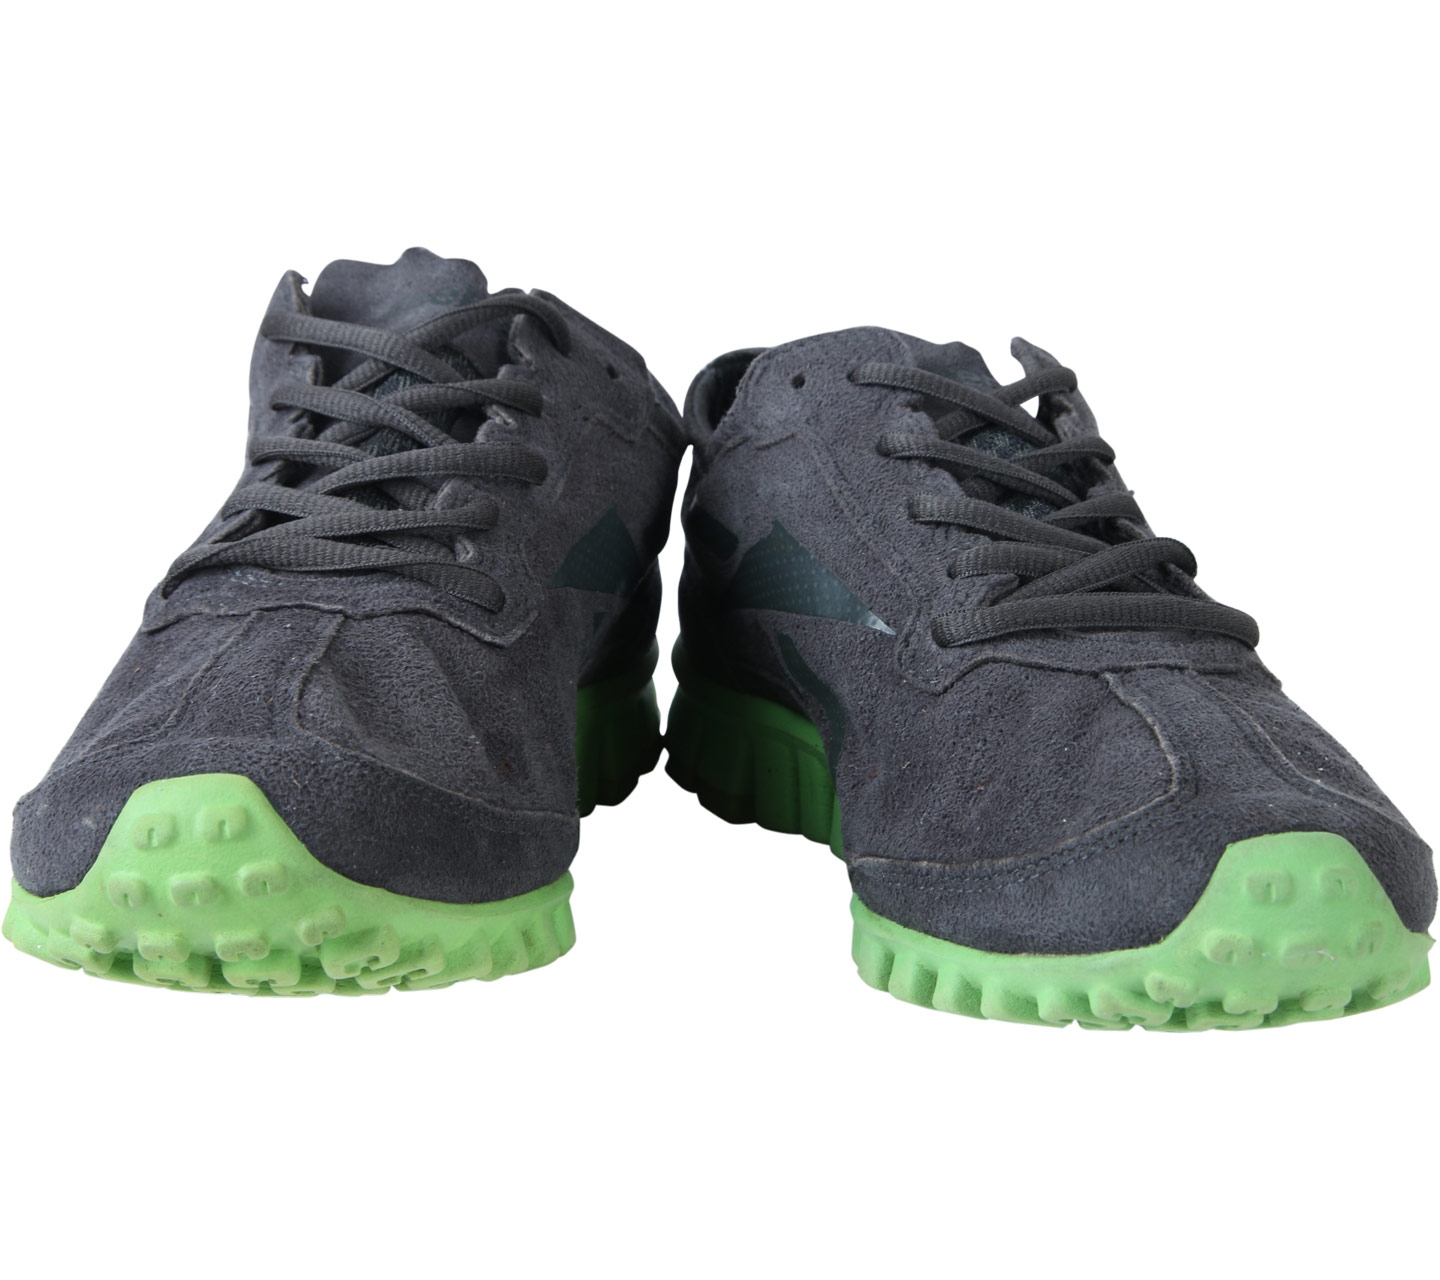 Reebok Black And Green Sneakers